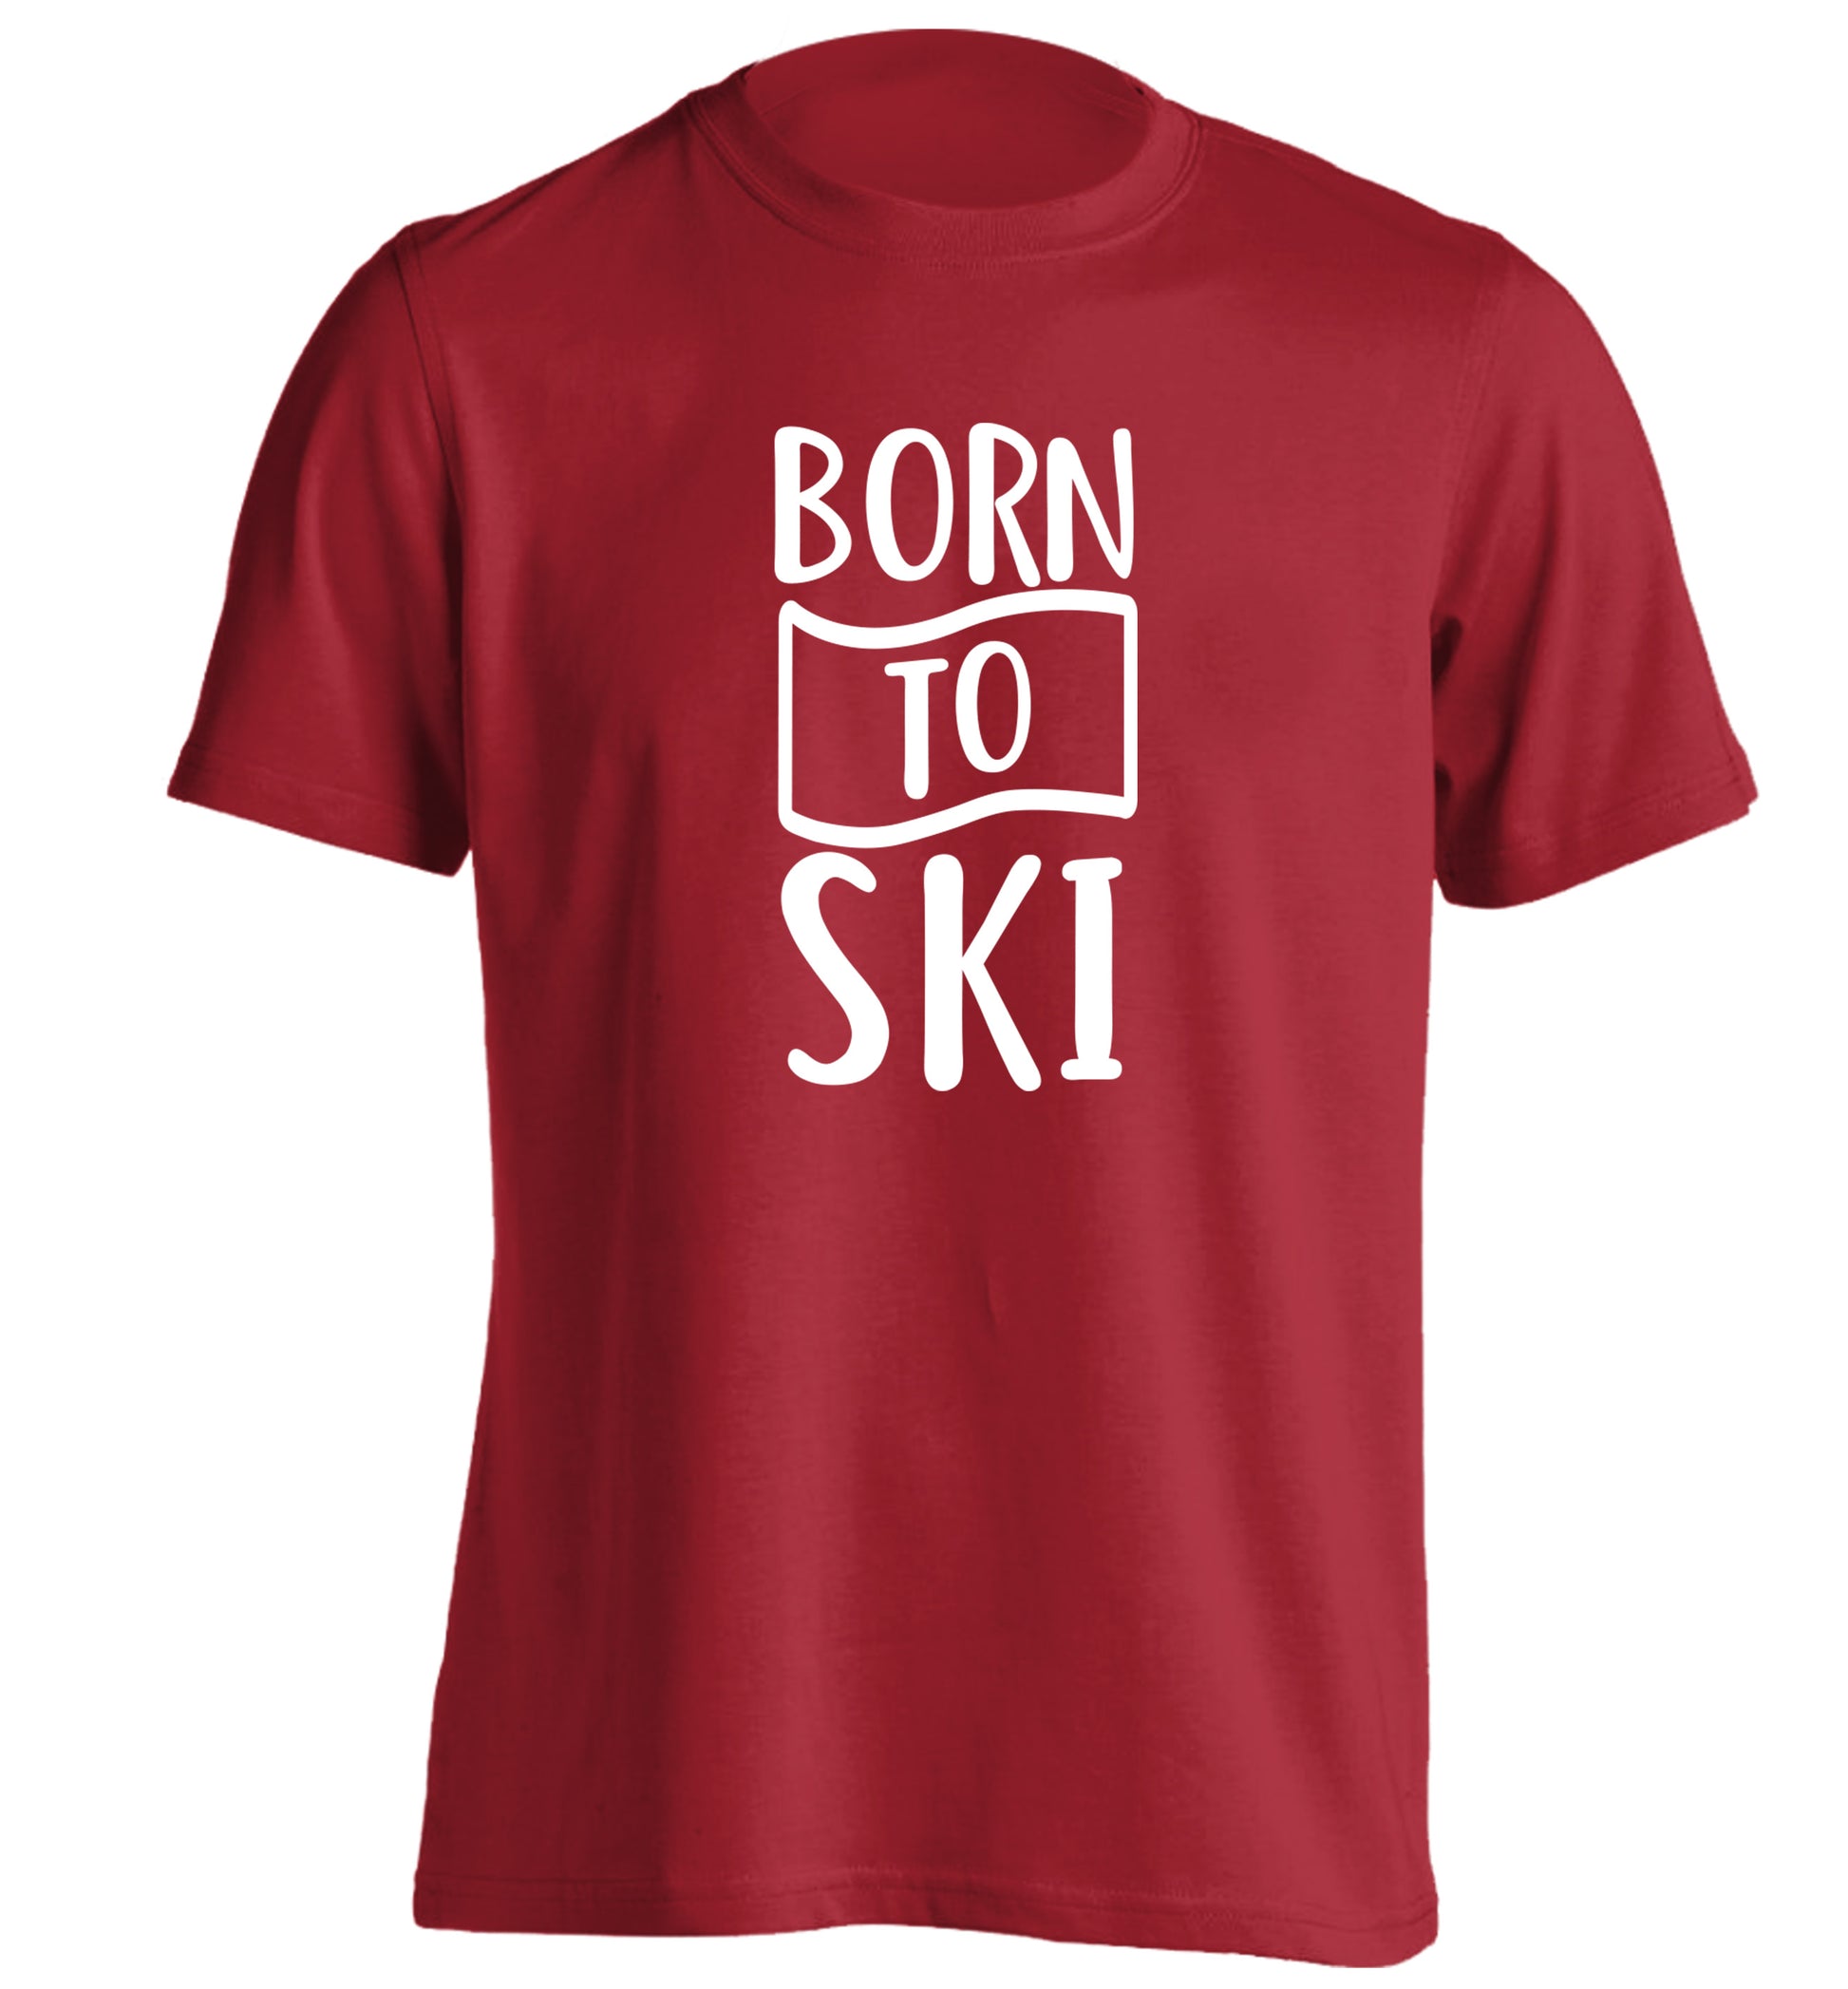 Born to ski adults unisexred Tshirt 2XL